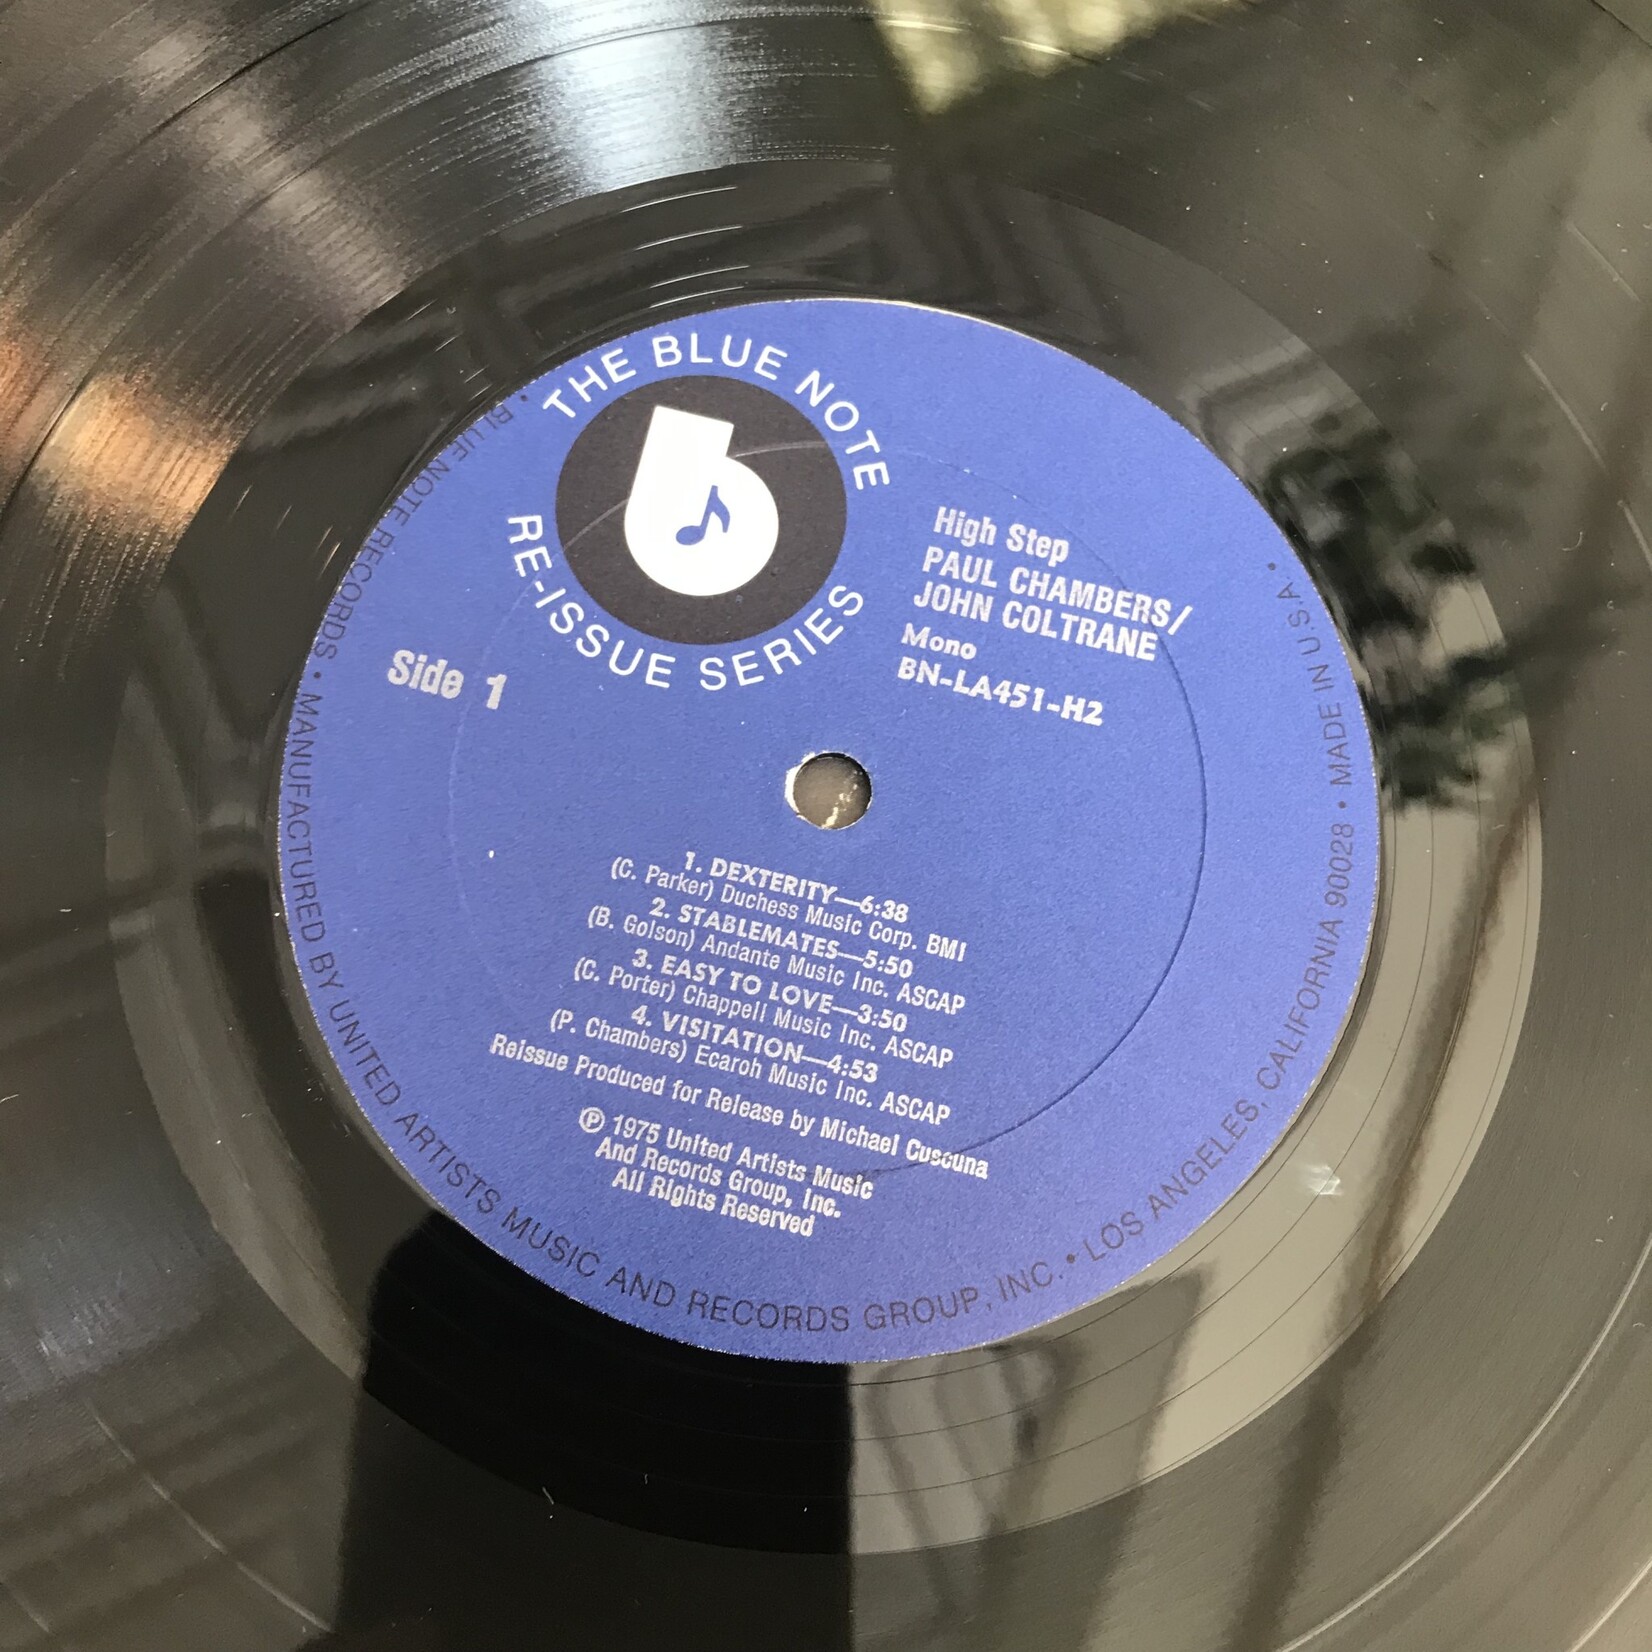 Paul Chambers, John Coltrane - High Step - BN LA451 2 - Vinyl LP (USED)